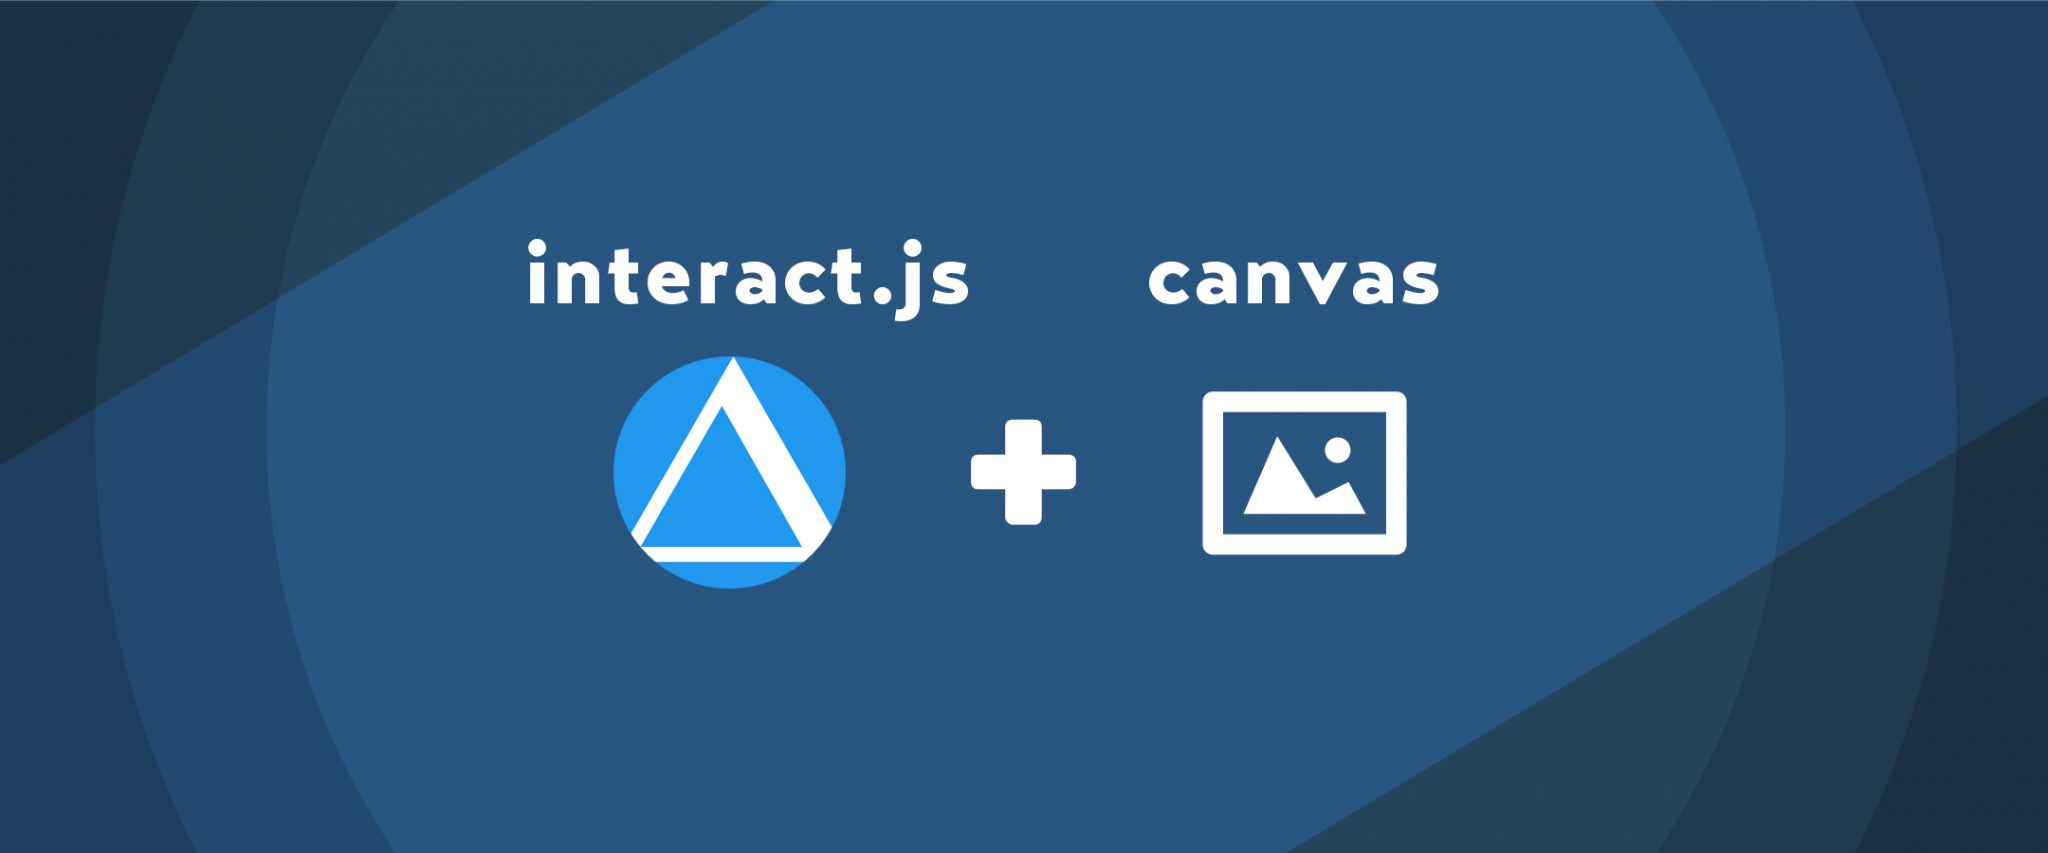 interact.js + canvas